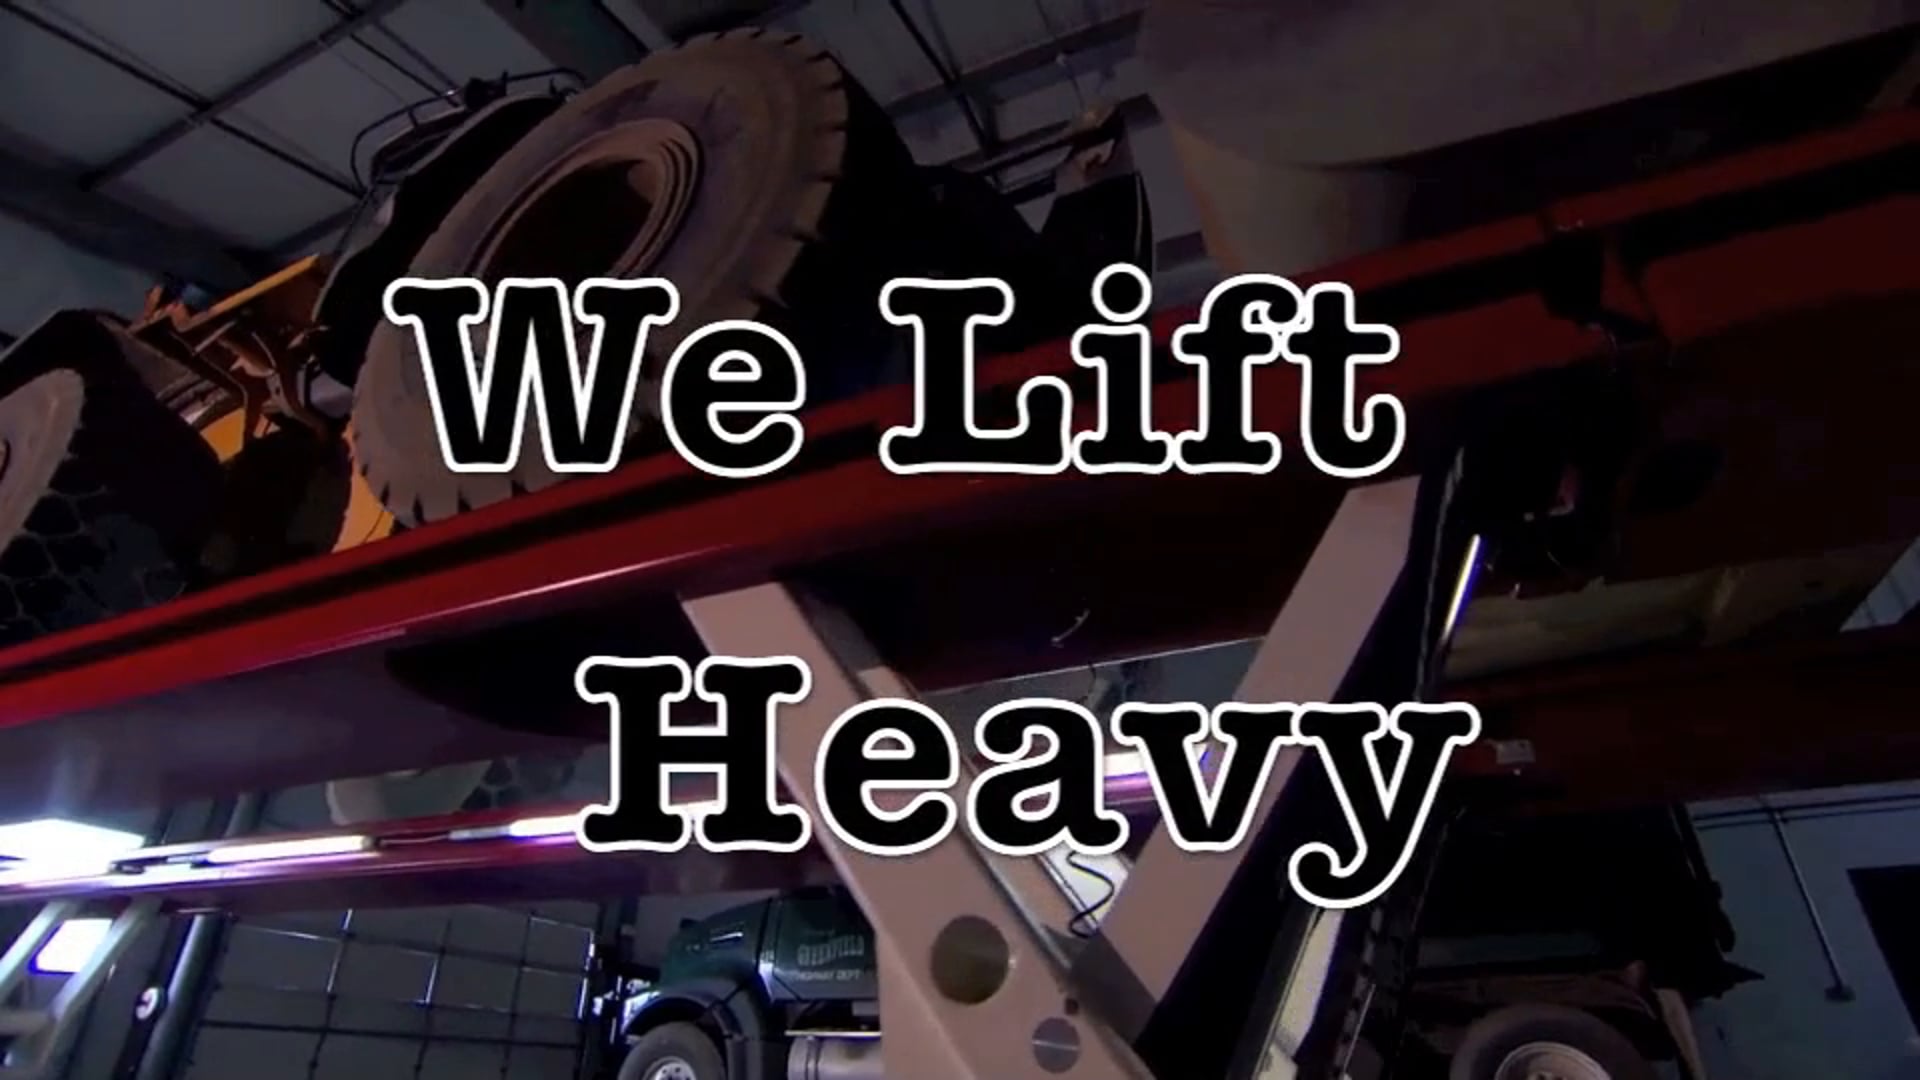 Stertil-Koni Lifts Heavy